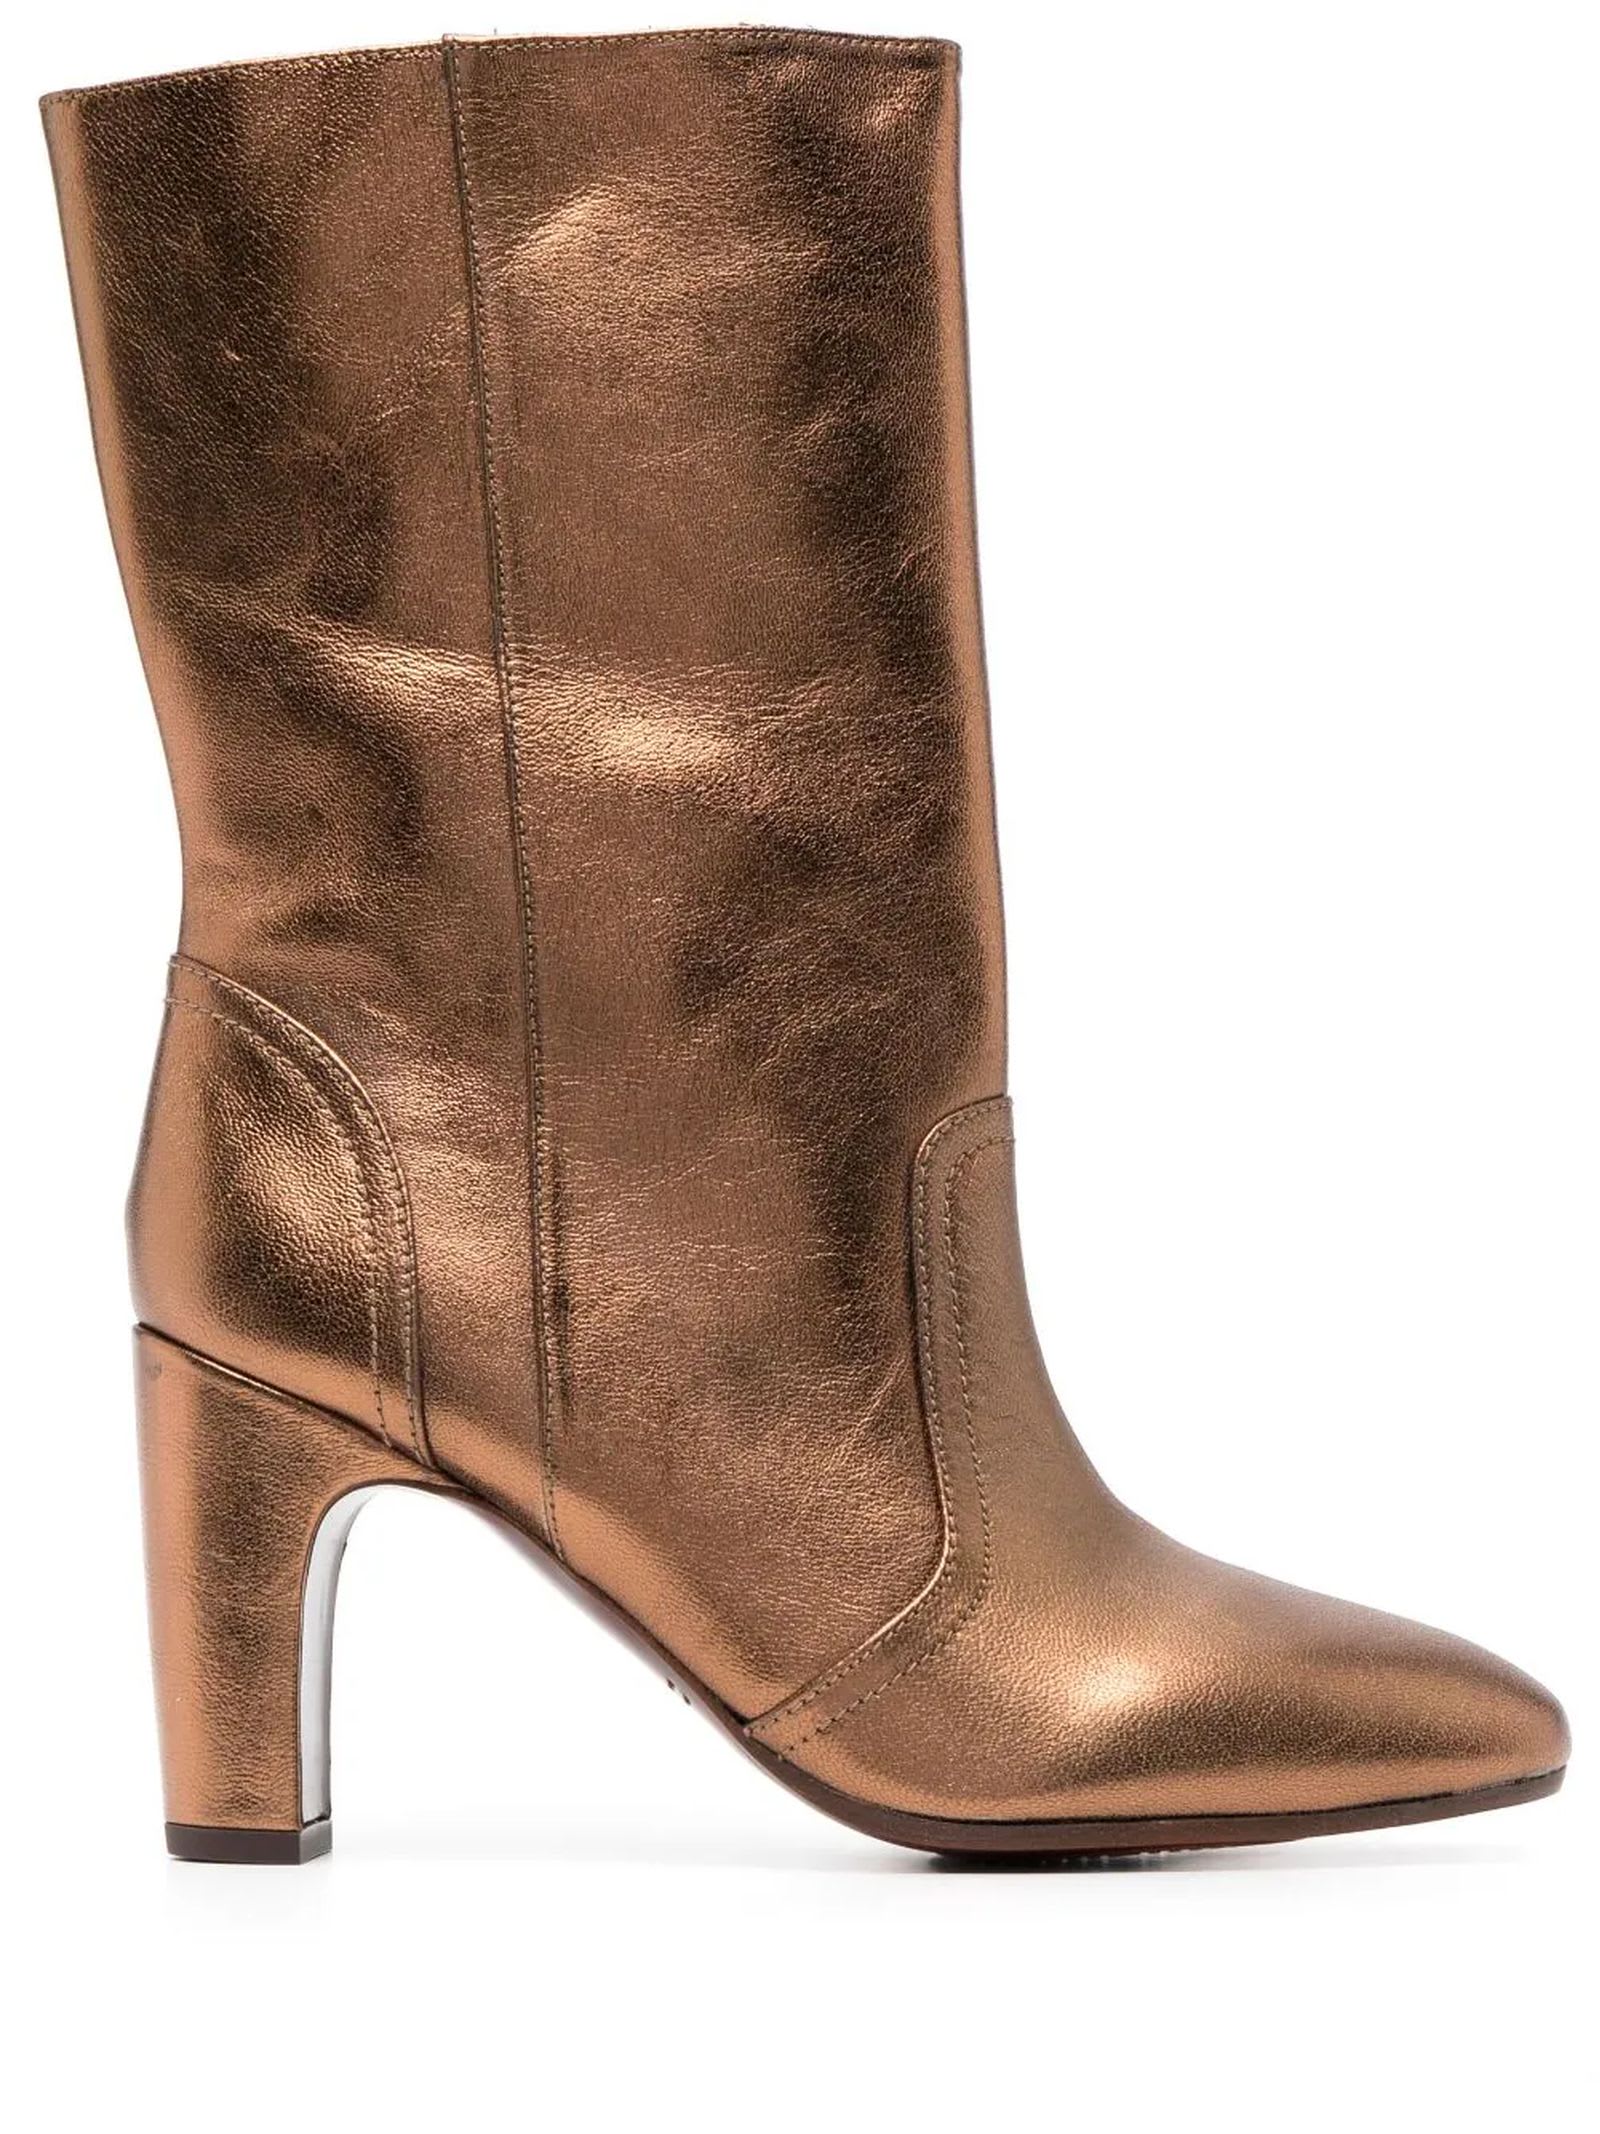 Coppertone Calf Leather Eyta Boots